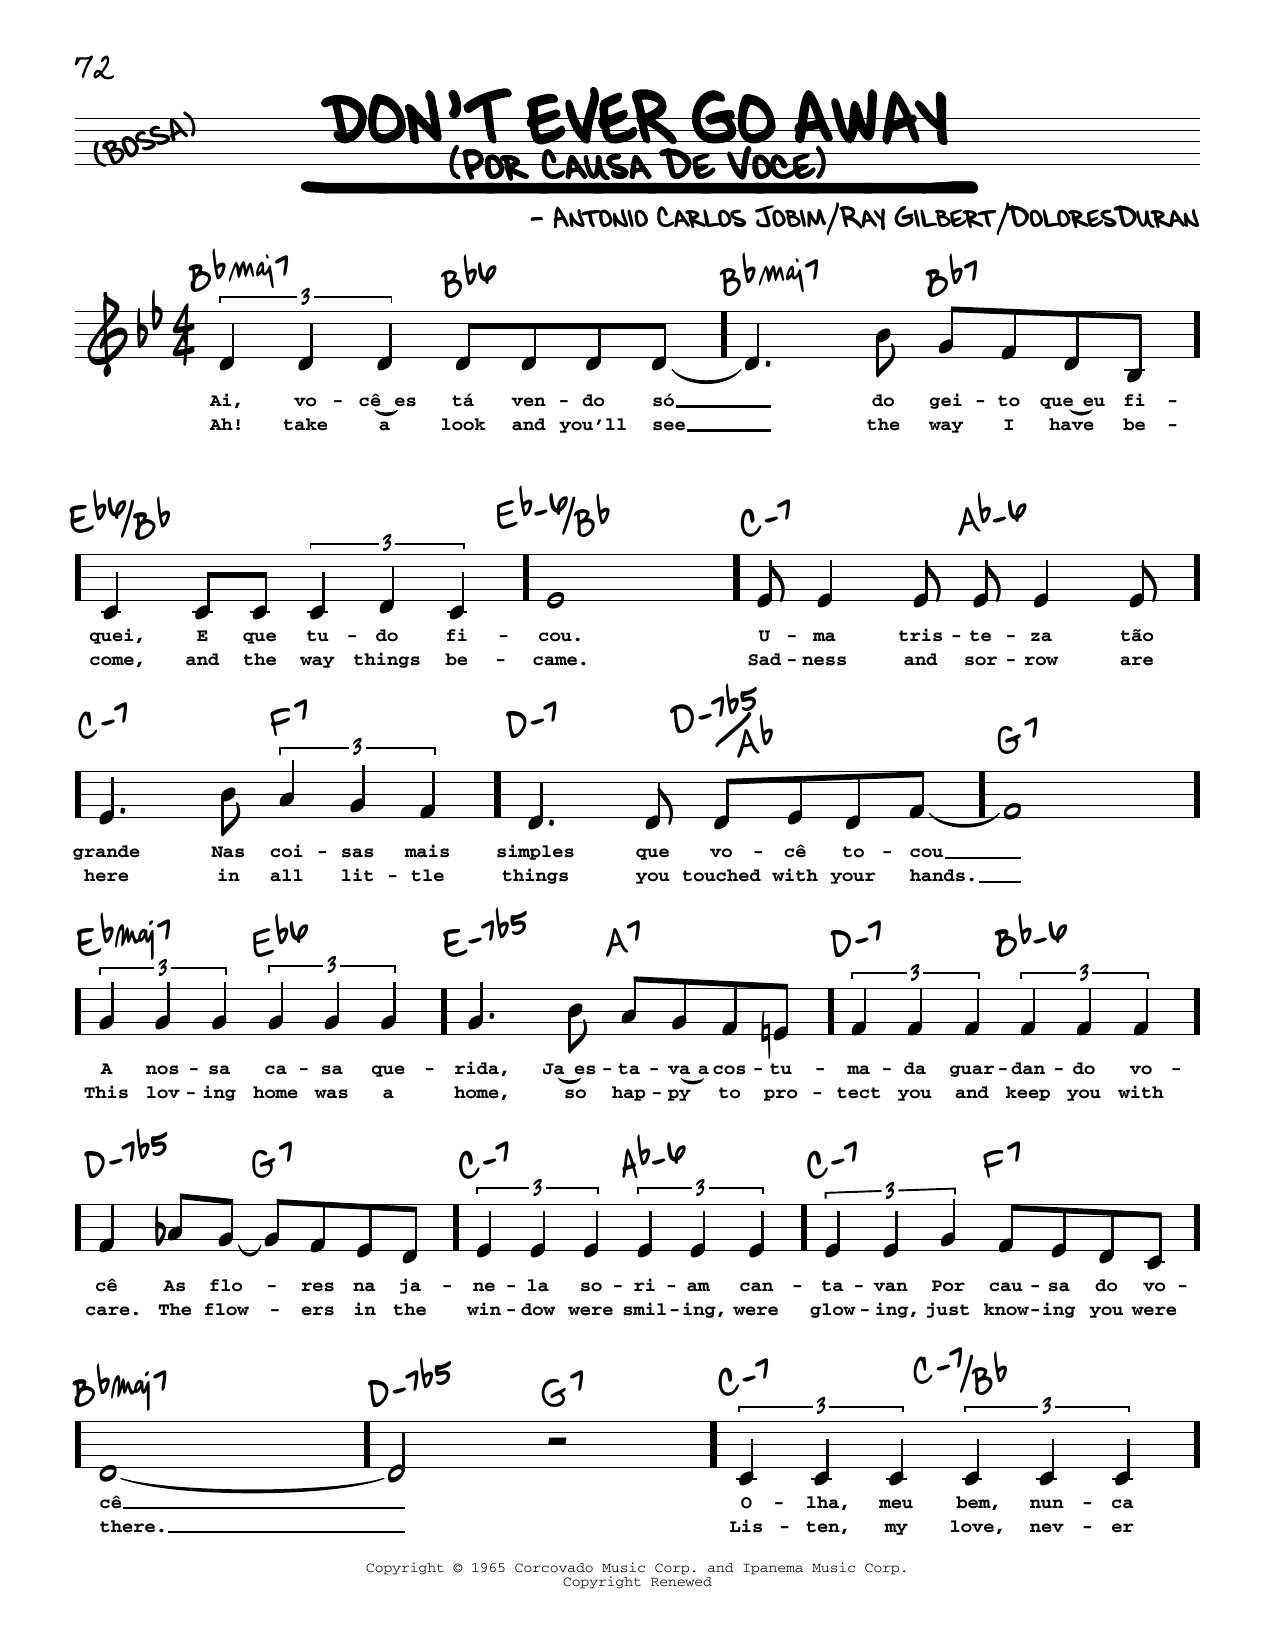 Antonio Carlos Jobim Don't Ever Go Away (Por Causa De Voce) (Low Voice) Sheet Music Notes & Chords for Real Book – Melody, Lyrics & Chords - Download or Print PDF